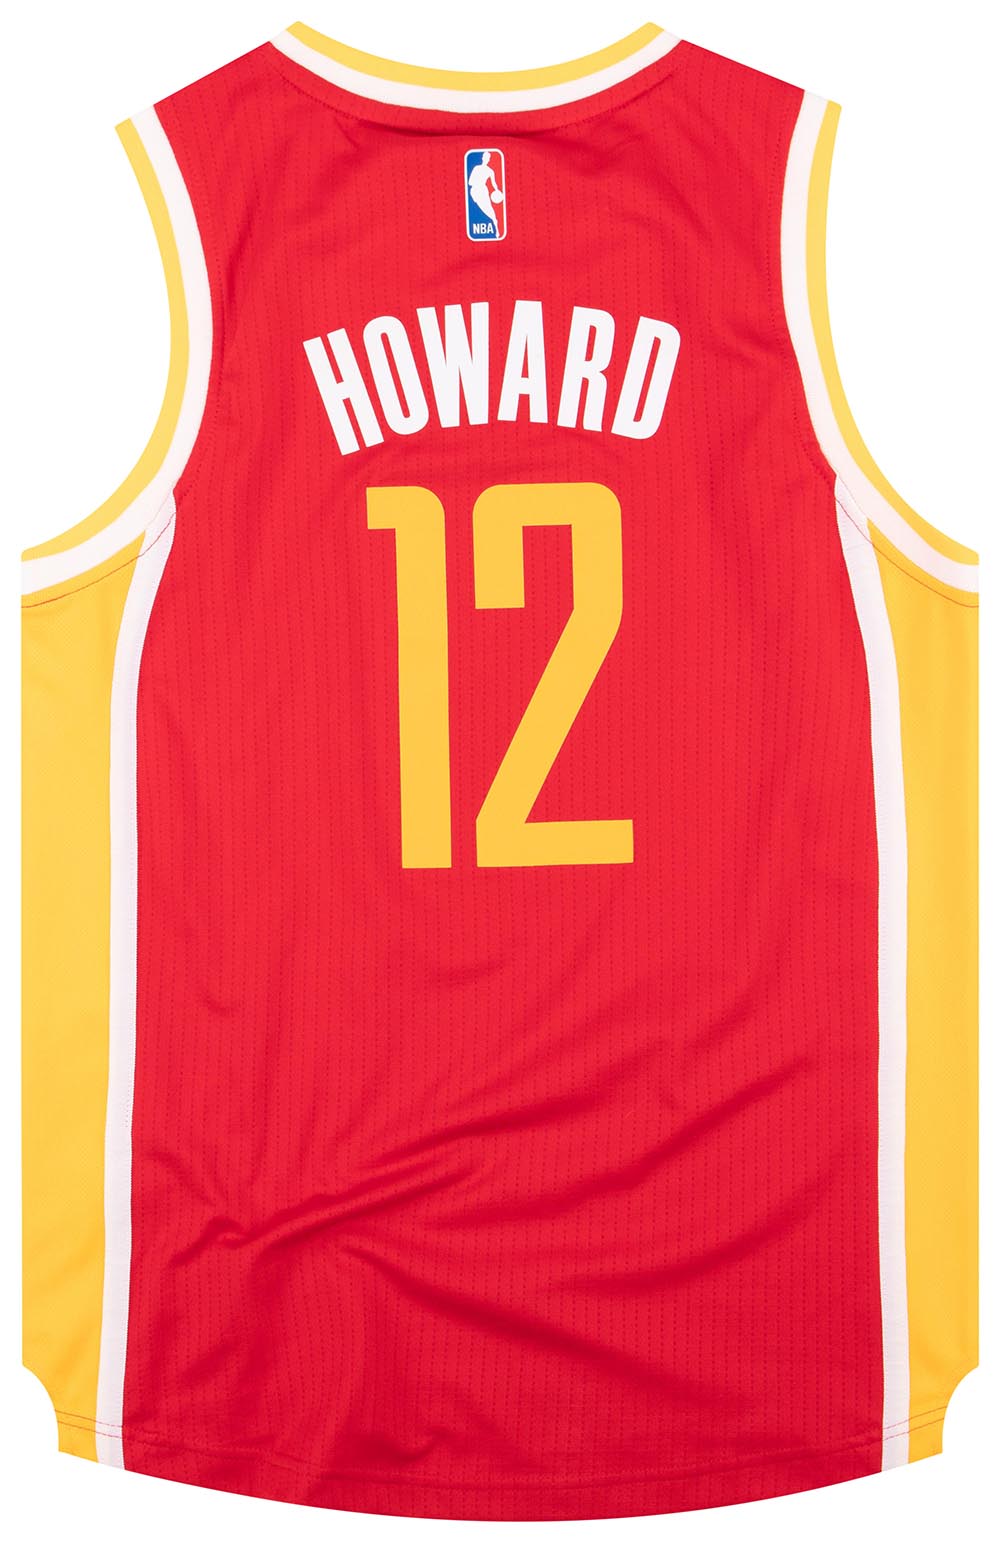 Adidas James Harden Houston Rockets NBA Jersey #13 Red Youth Medium